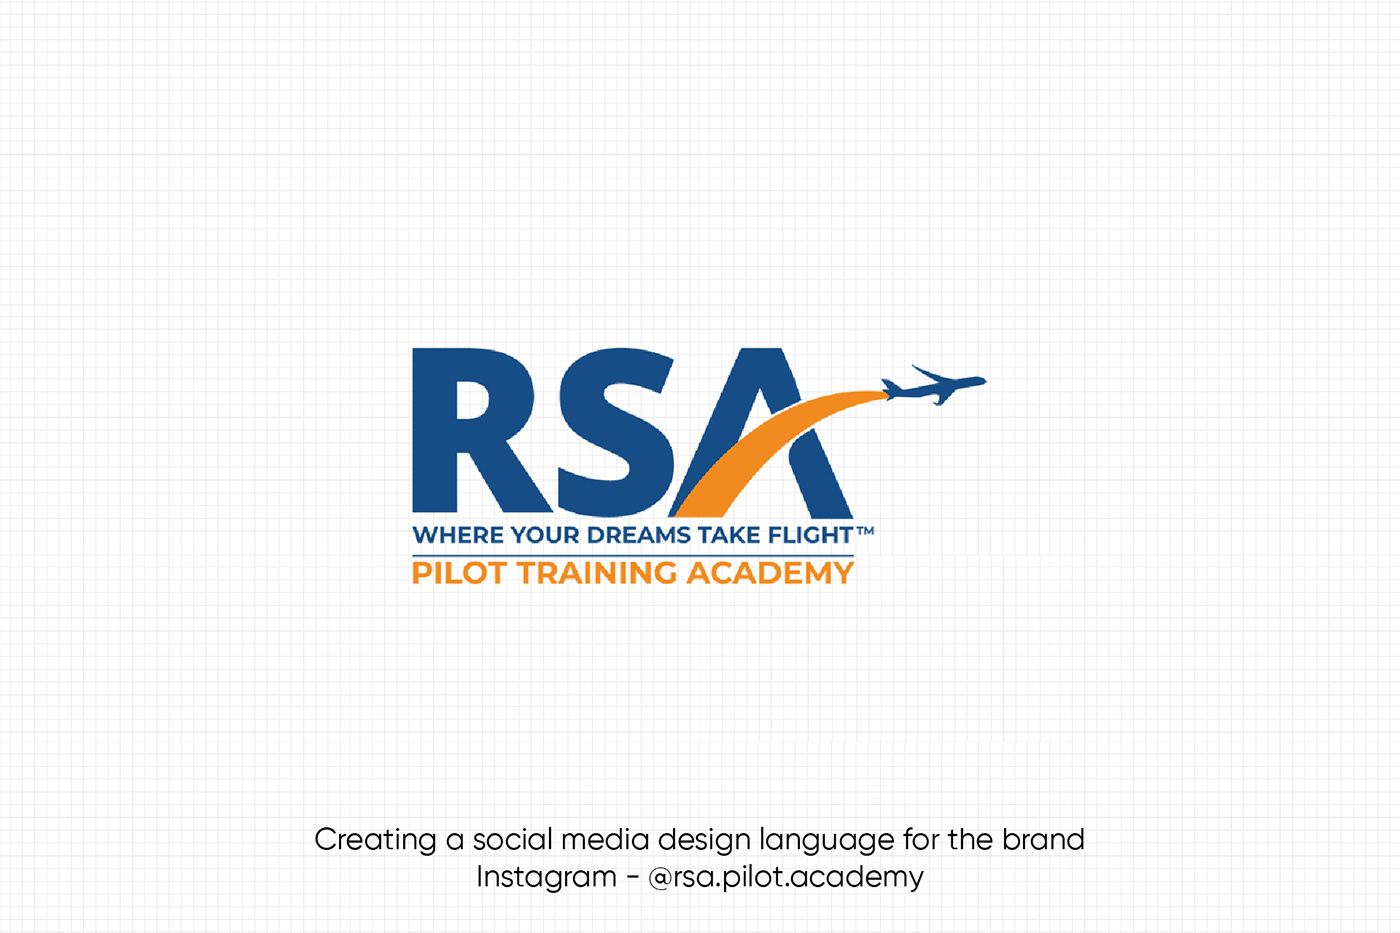 Rsa Social media post design language design thinking